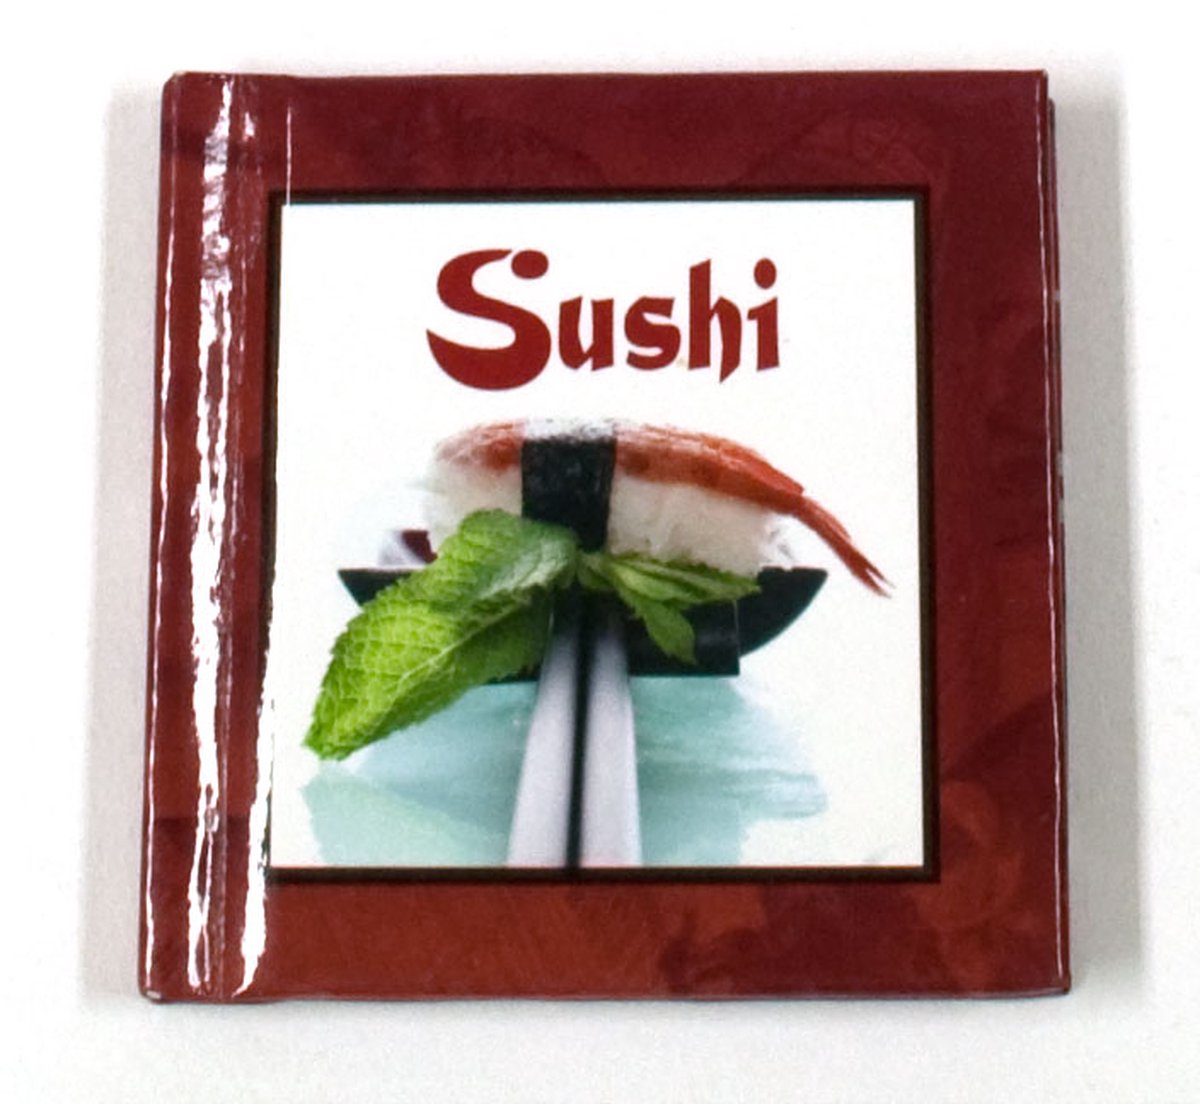 Sushi - 4 you kookmini's